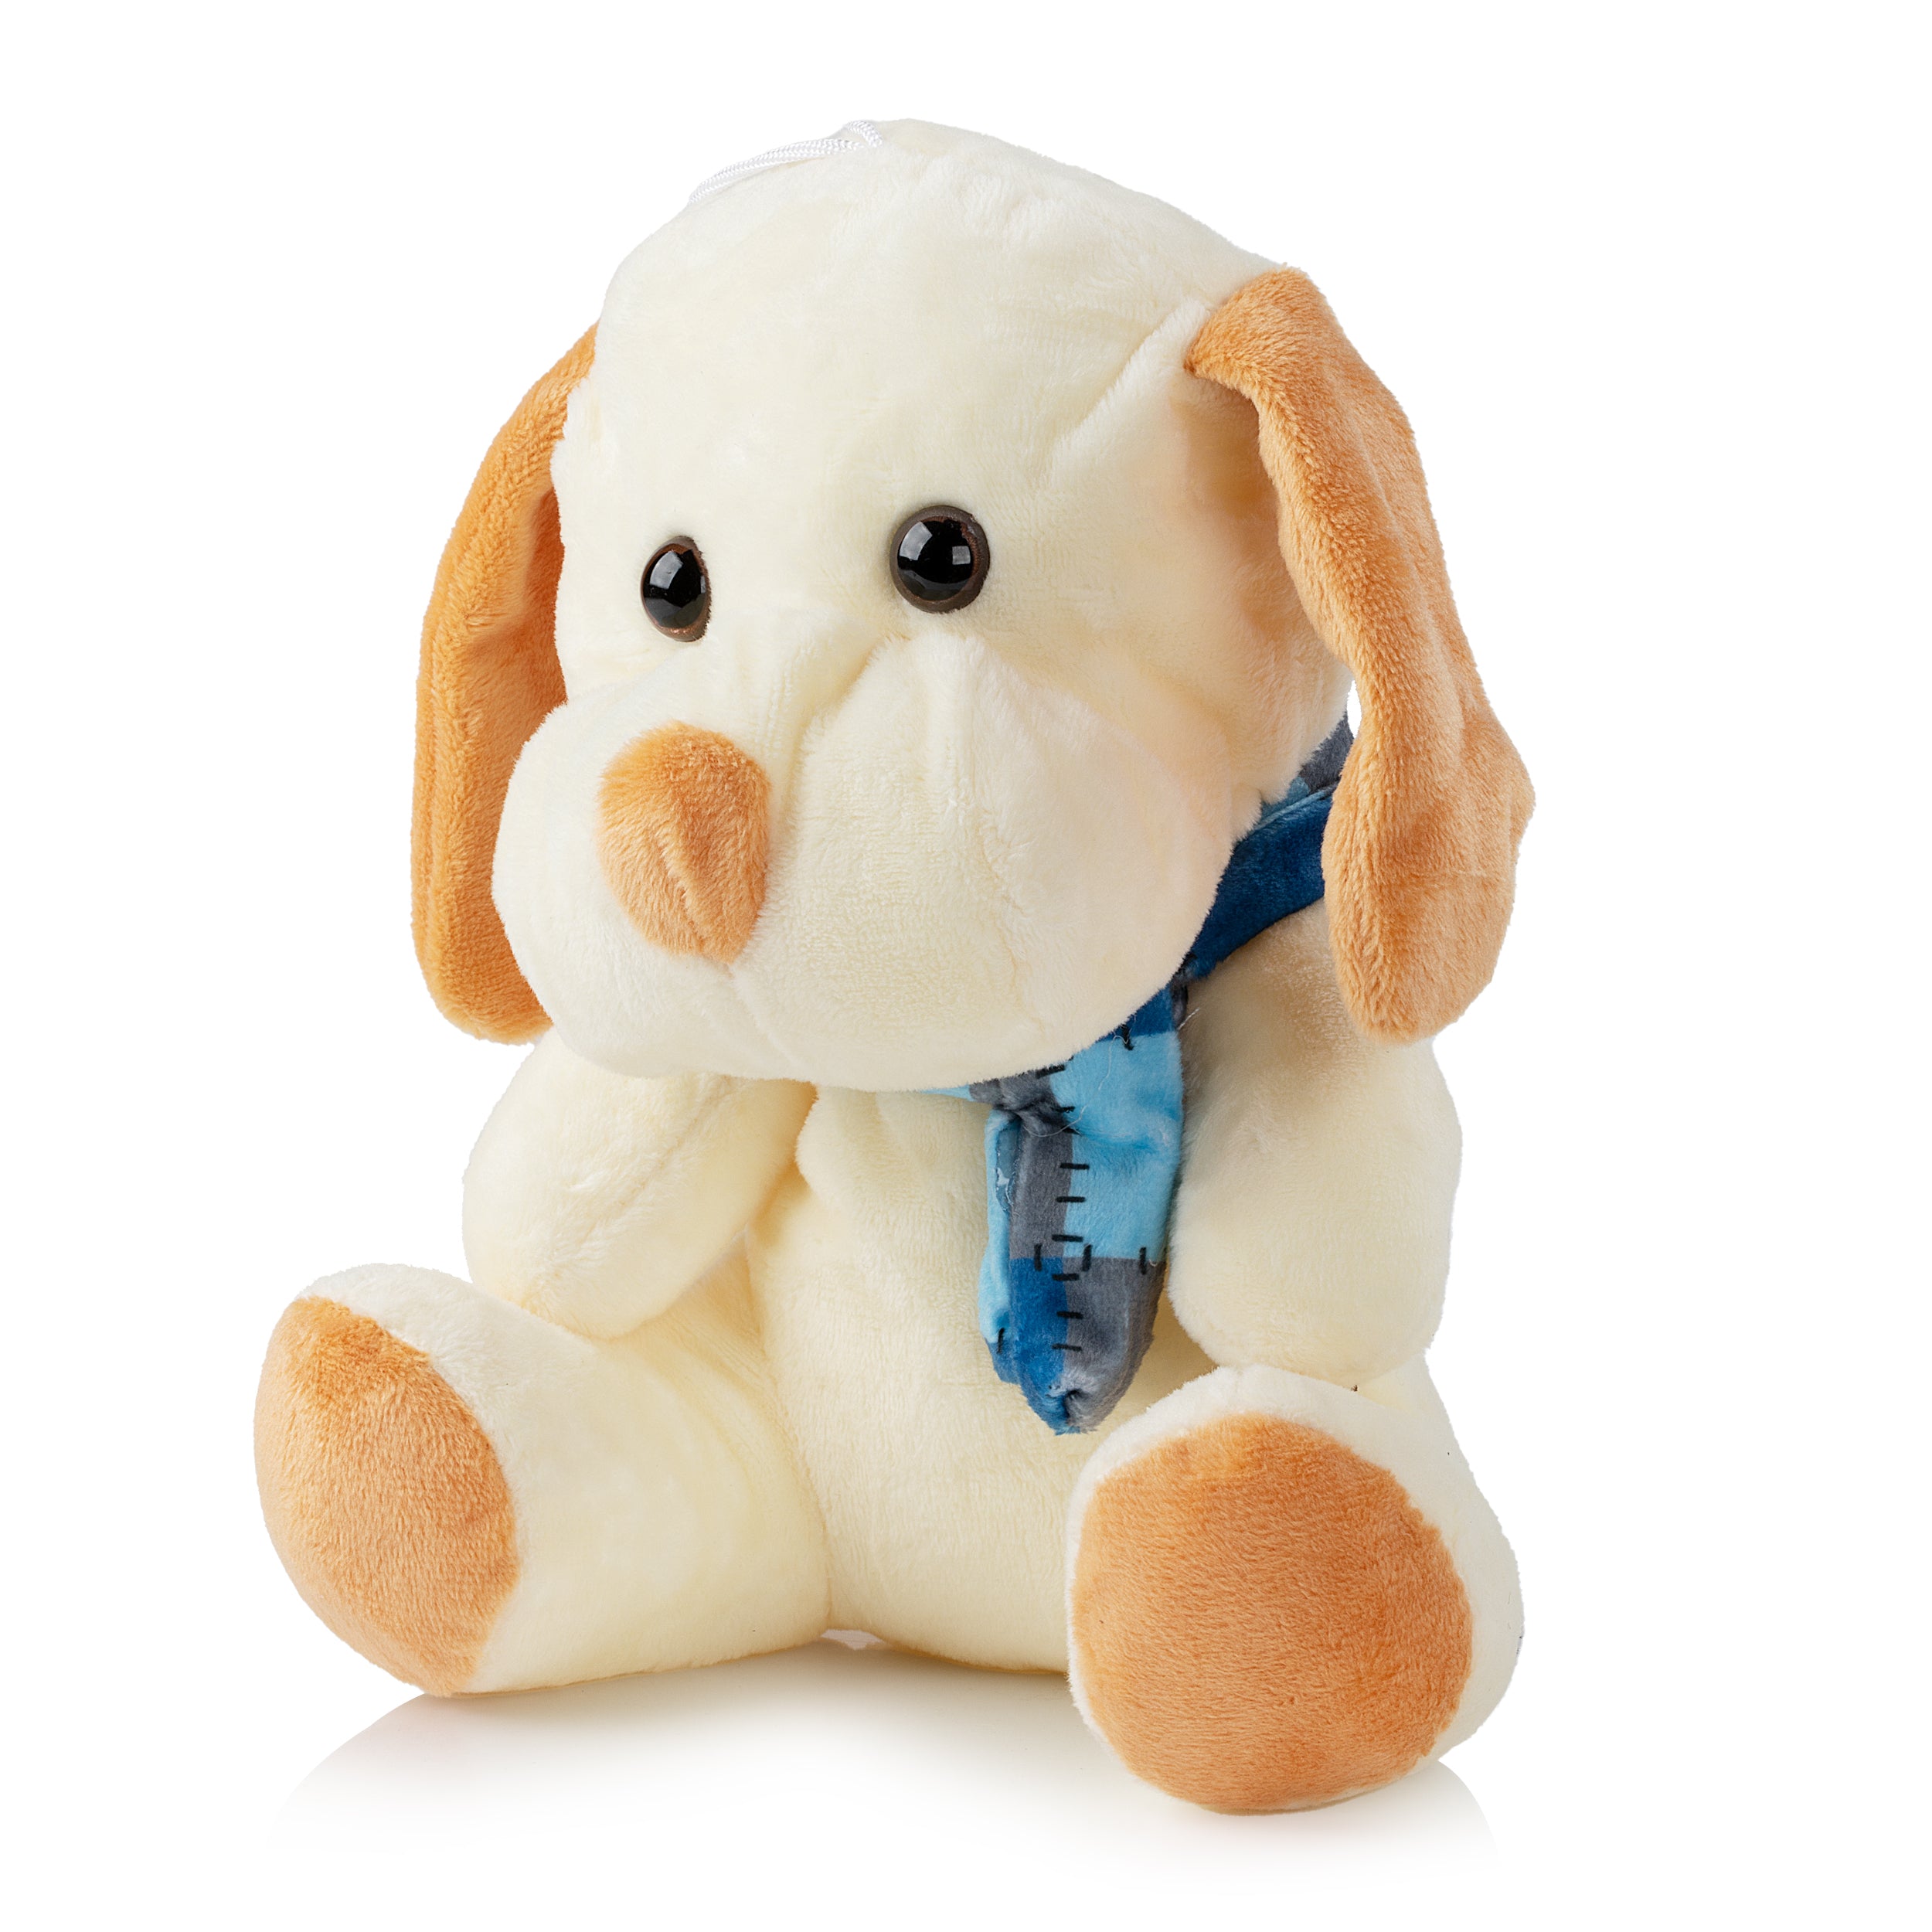 Plush Toys - Noah's Ark Stuffed Animals 8"